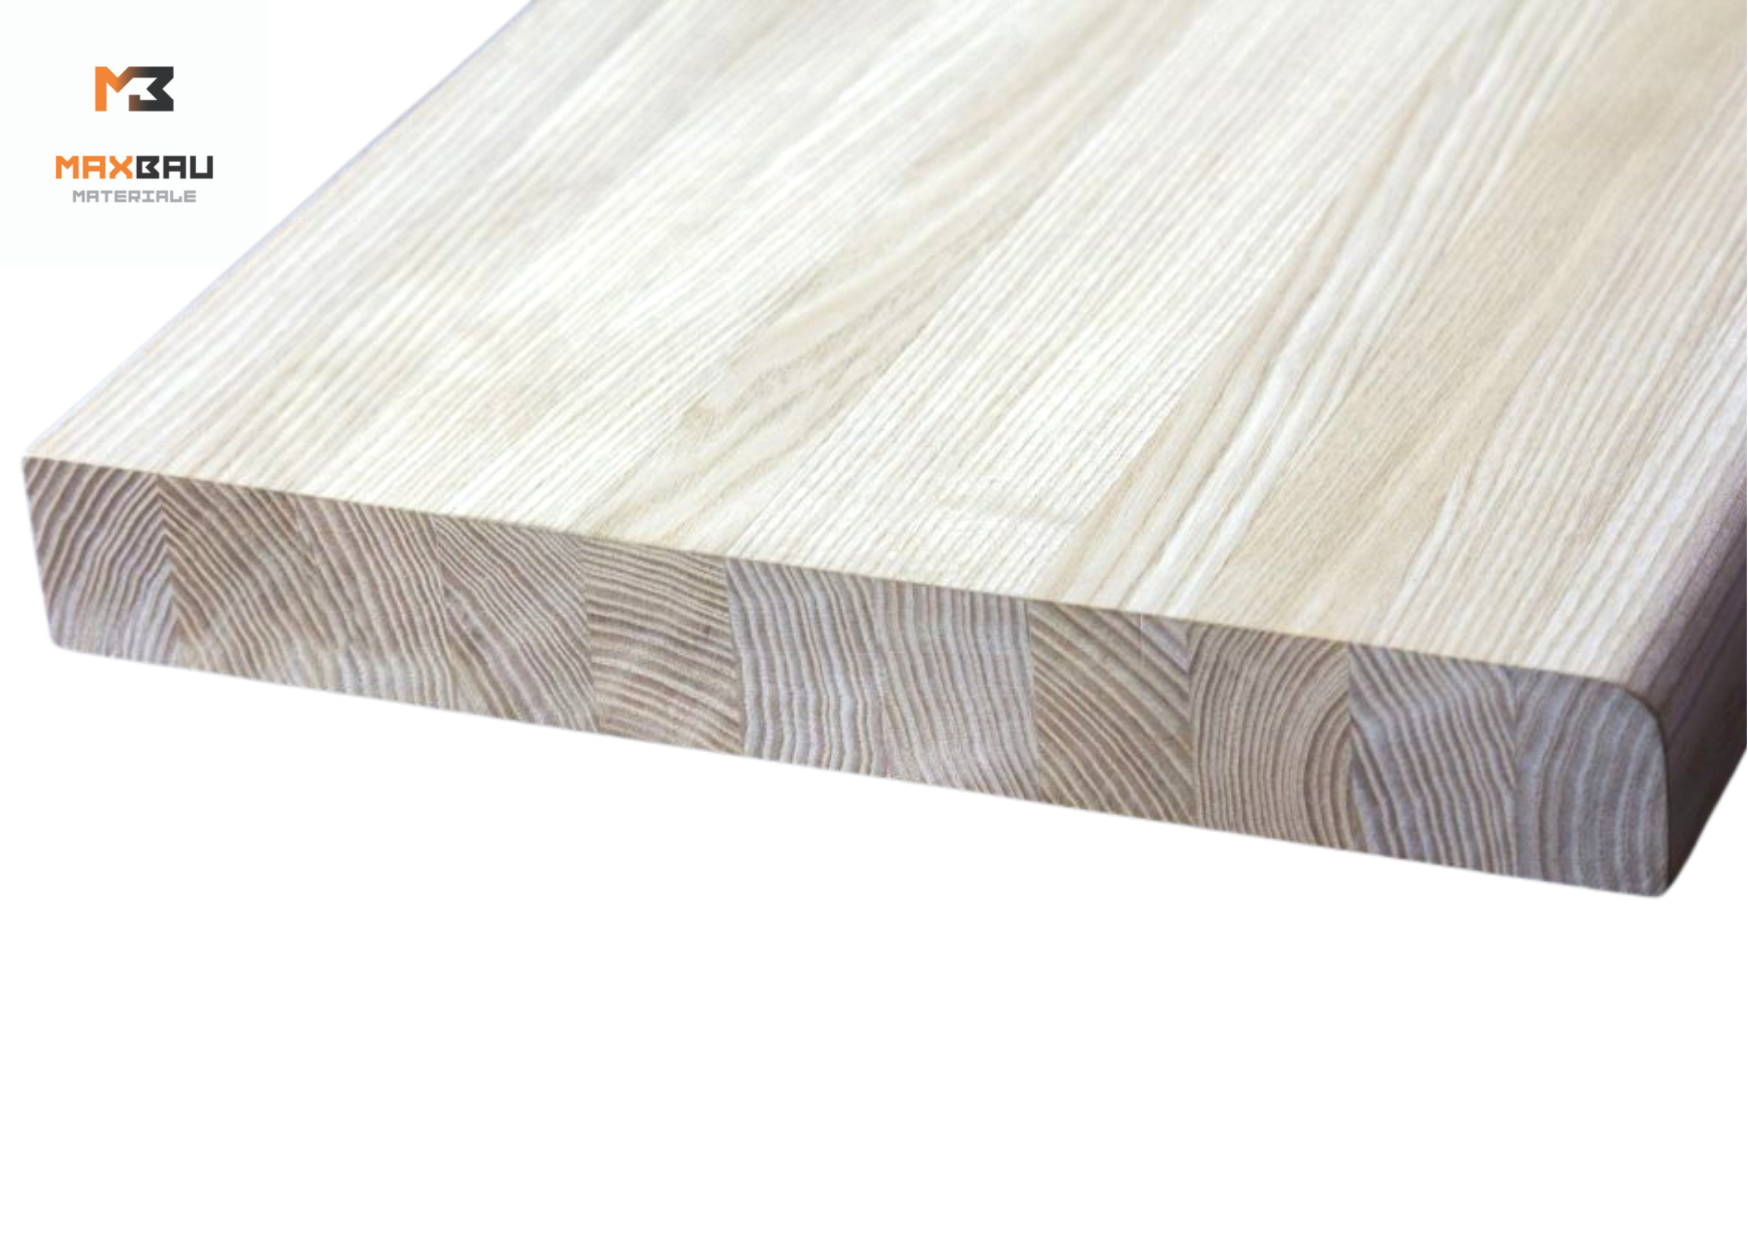 Placi din lemn incleiat - Placa de lemn incleiat MaxBau 2000 x 600 x 28 mm Clasa AB, https:maxbau.ro